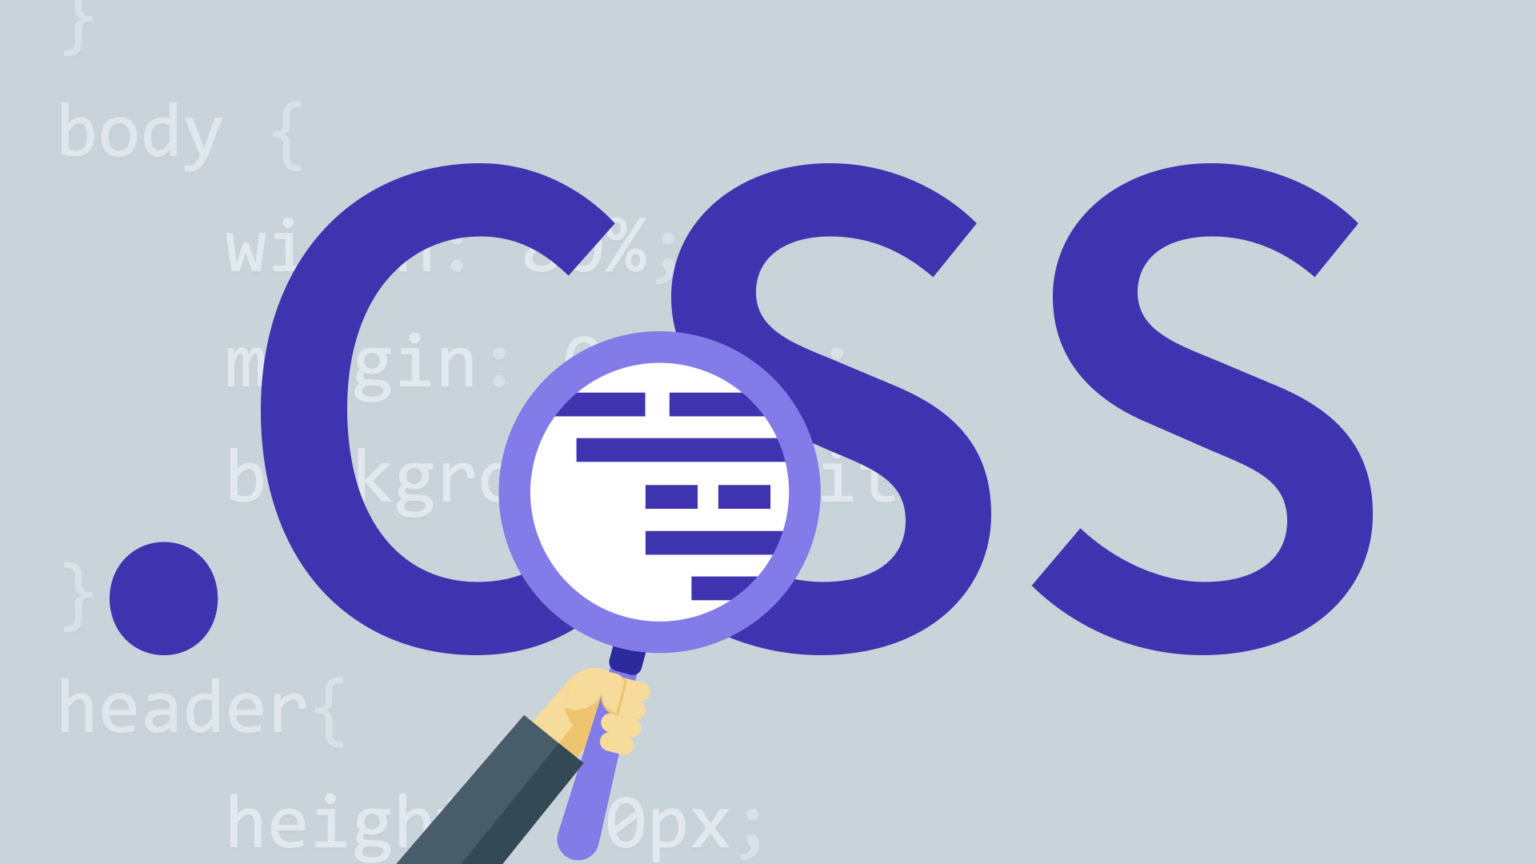 [Advanced SEO][Part-3] ওয়েবসাইটের স্পিড এবং পারফরমেন্স বৃদ্ধি ( CSS Optimization)